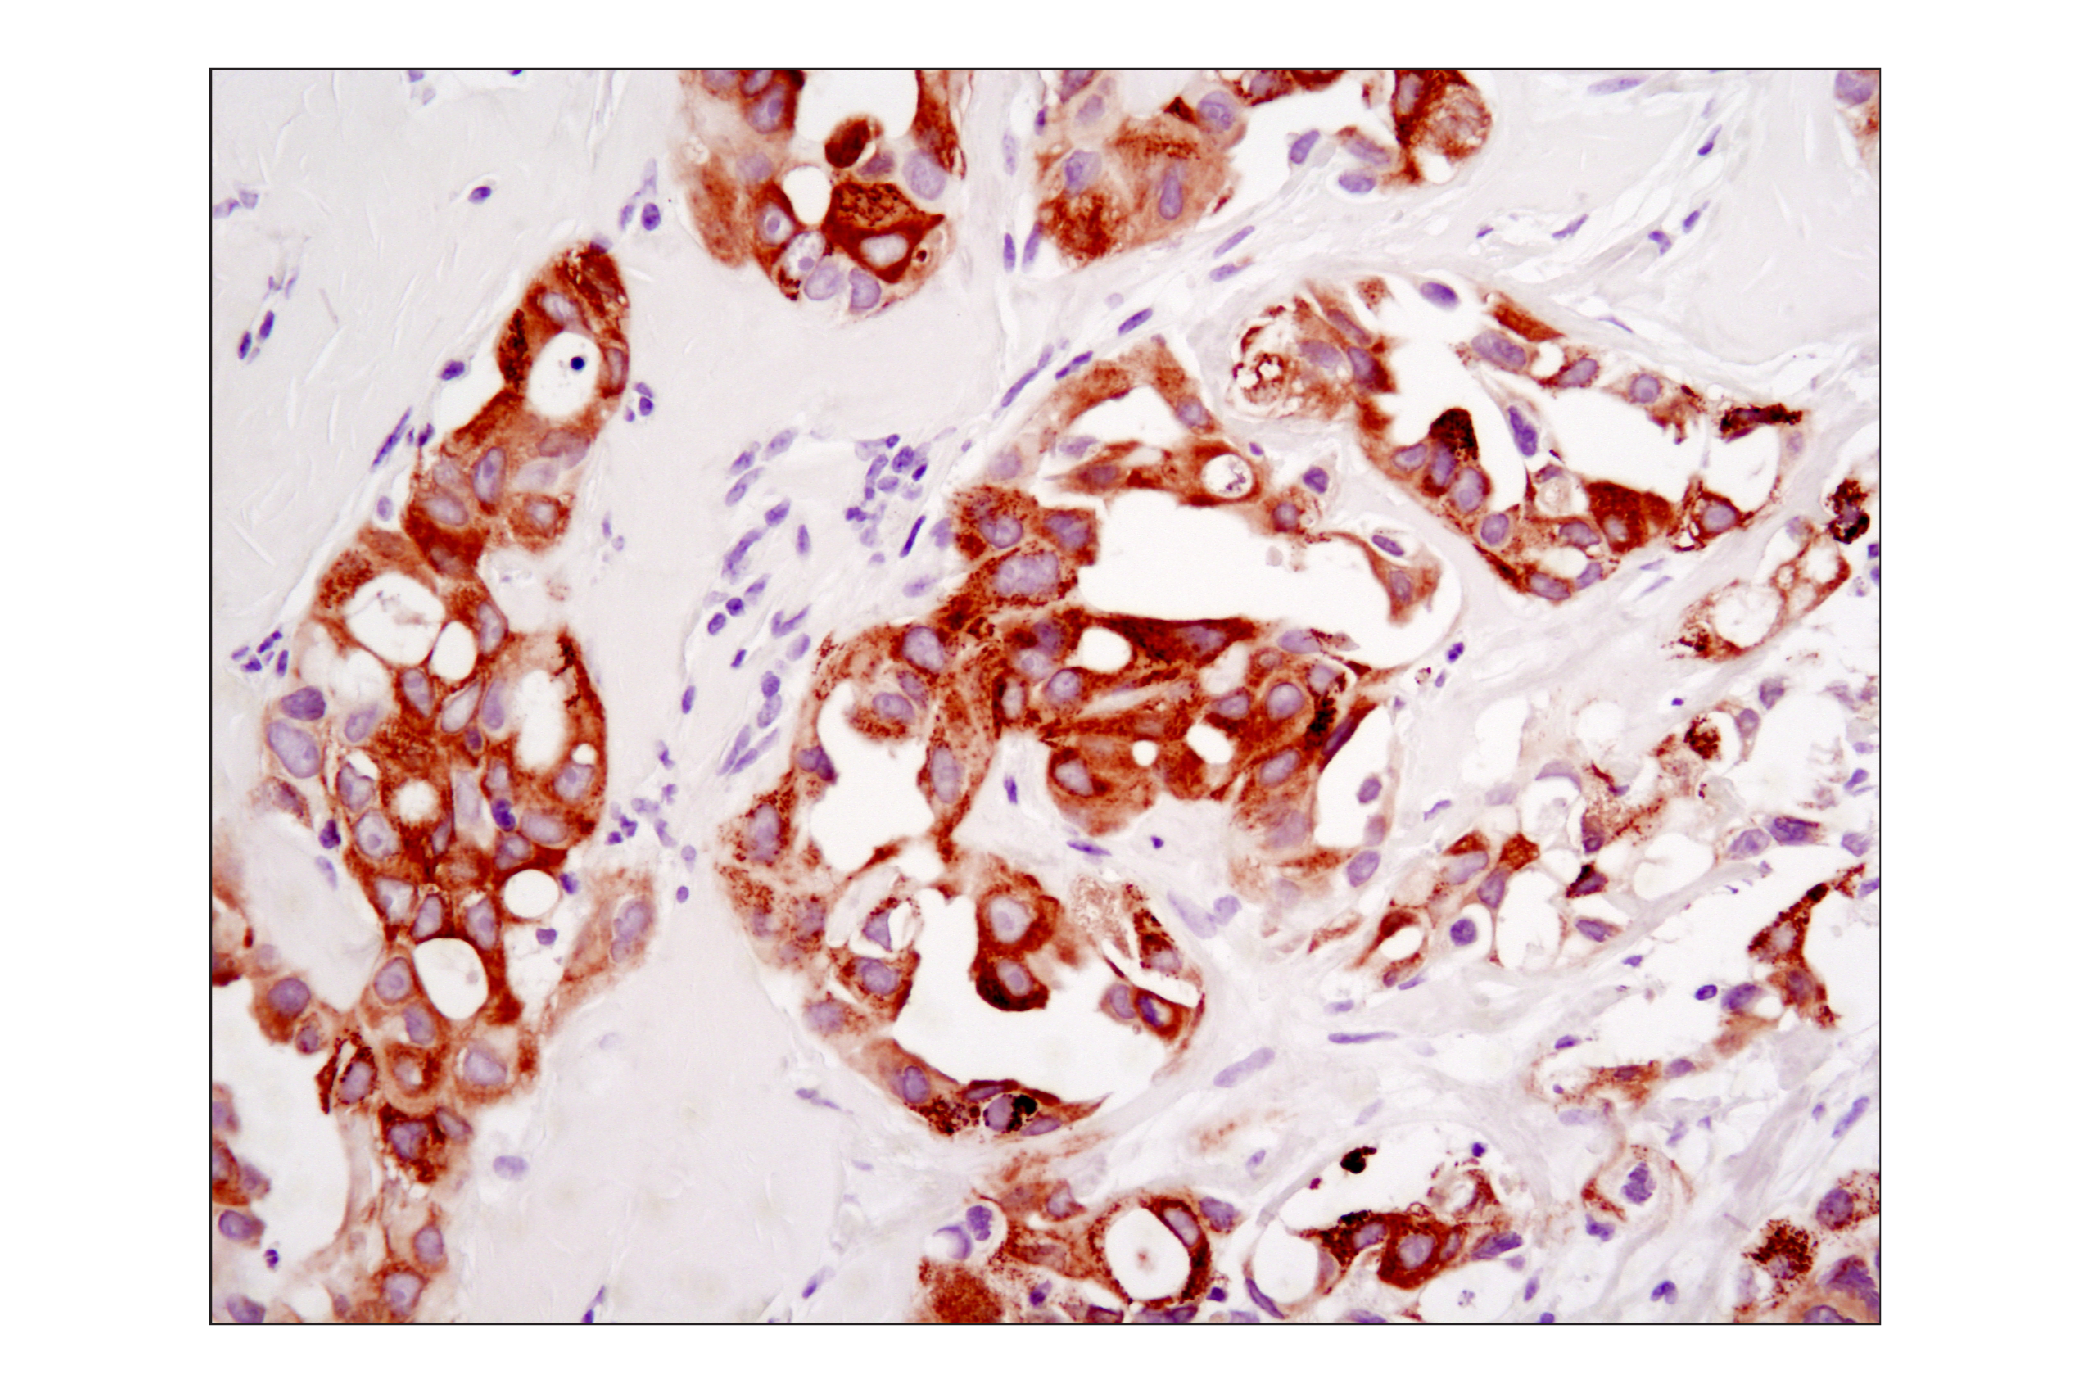  Image 55: Lung Cancer RTK Antibody Sampler Kit